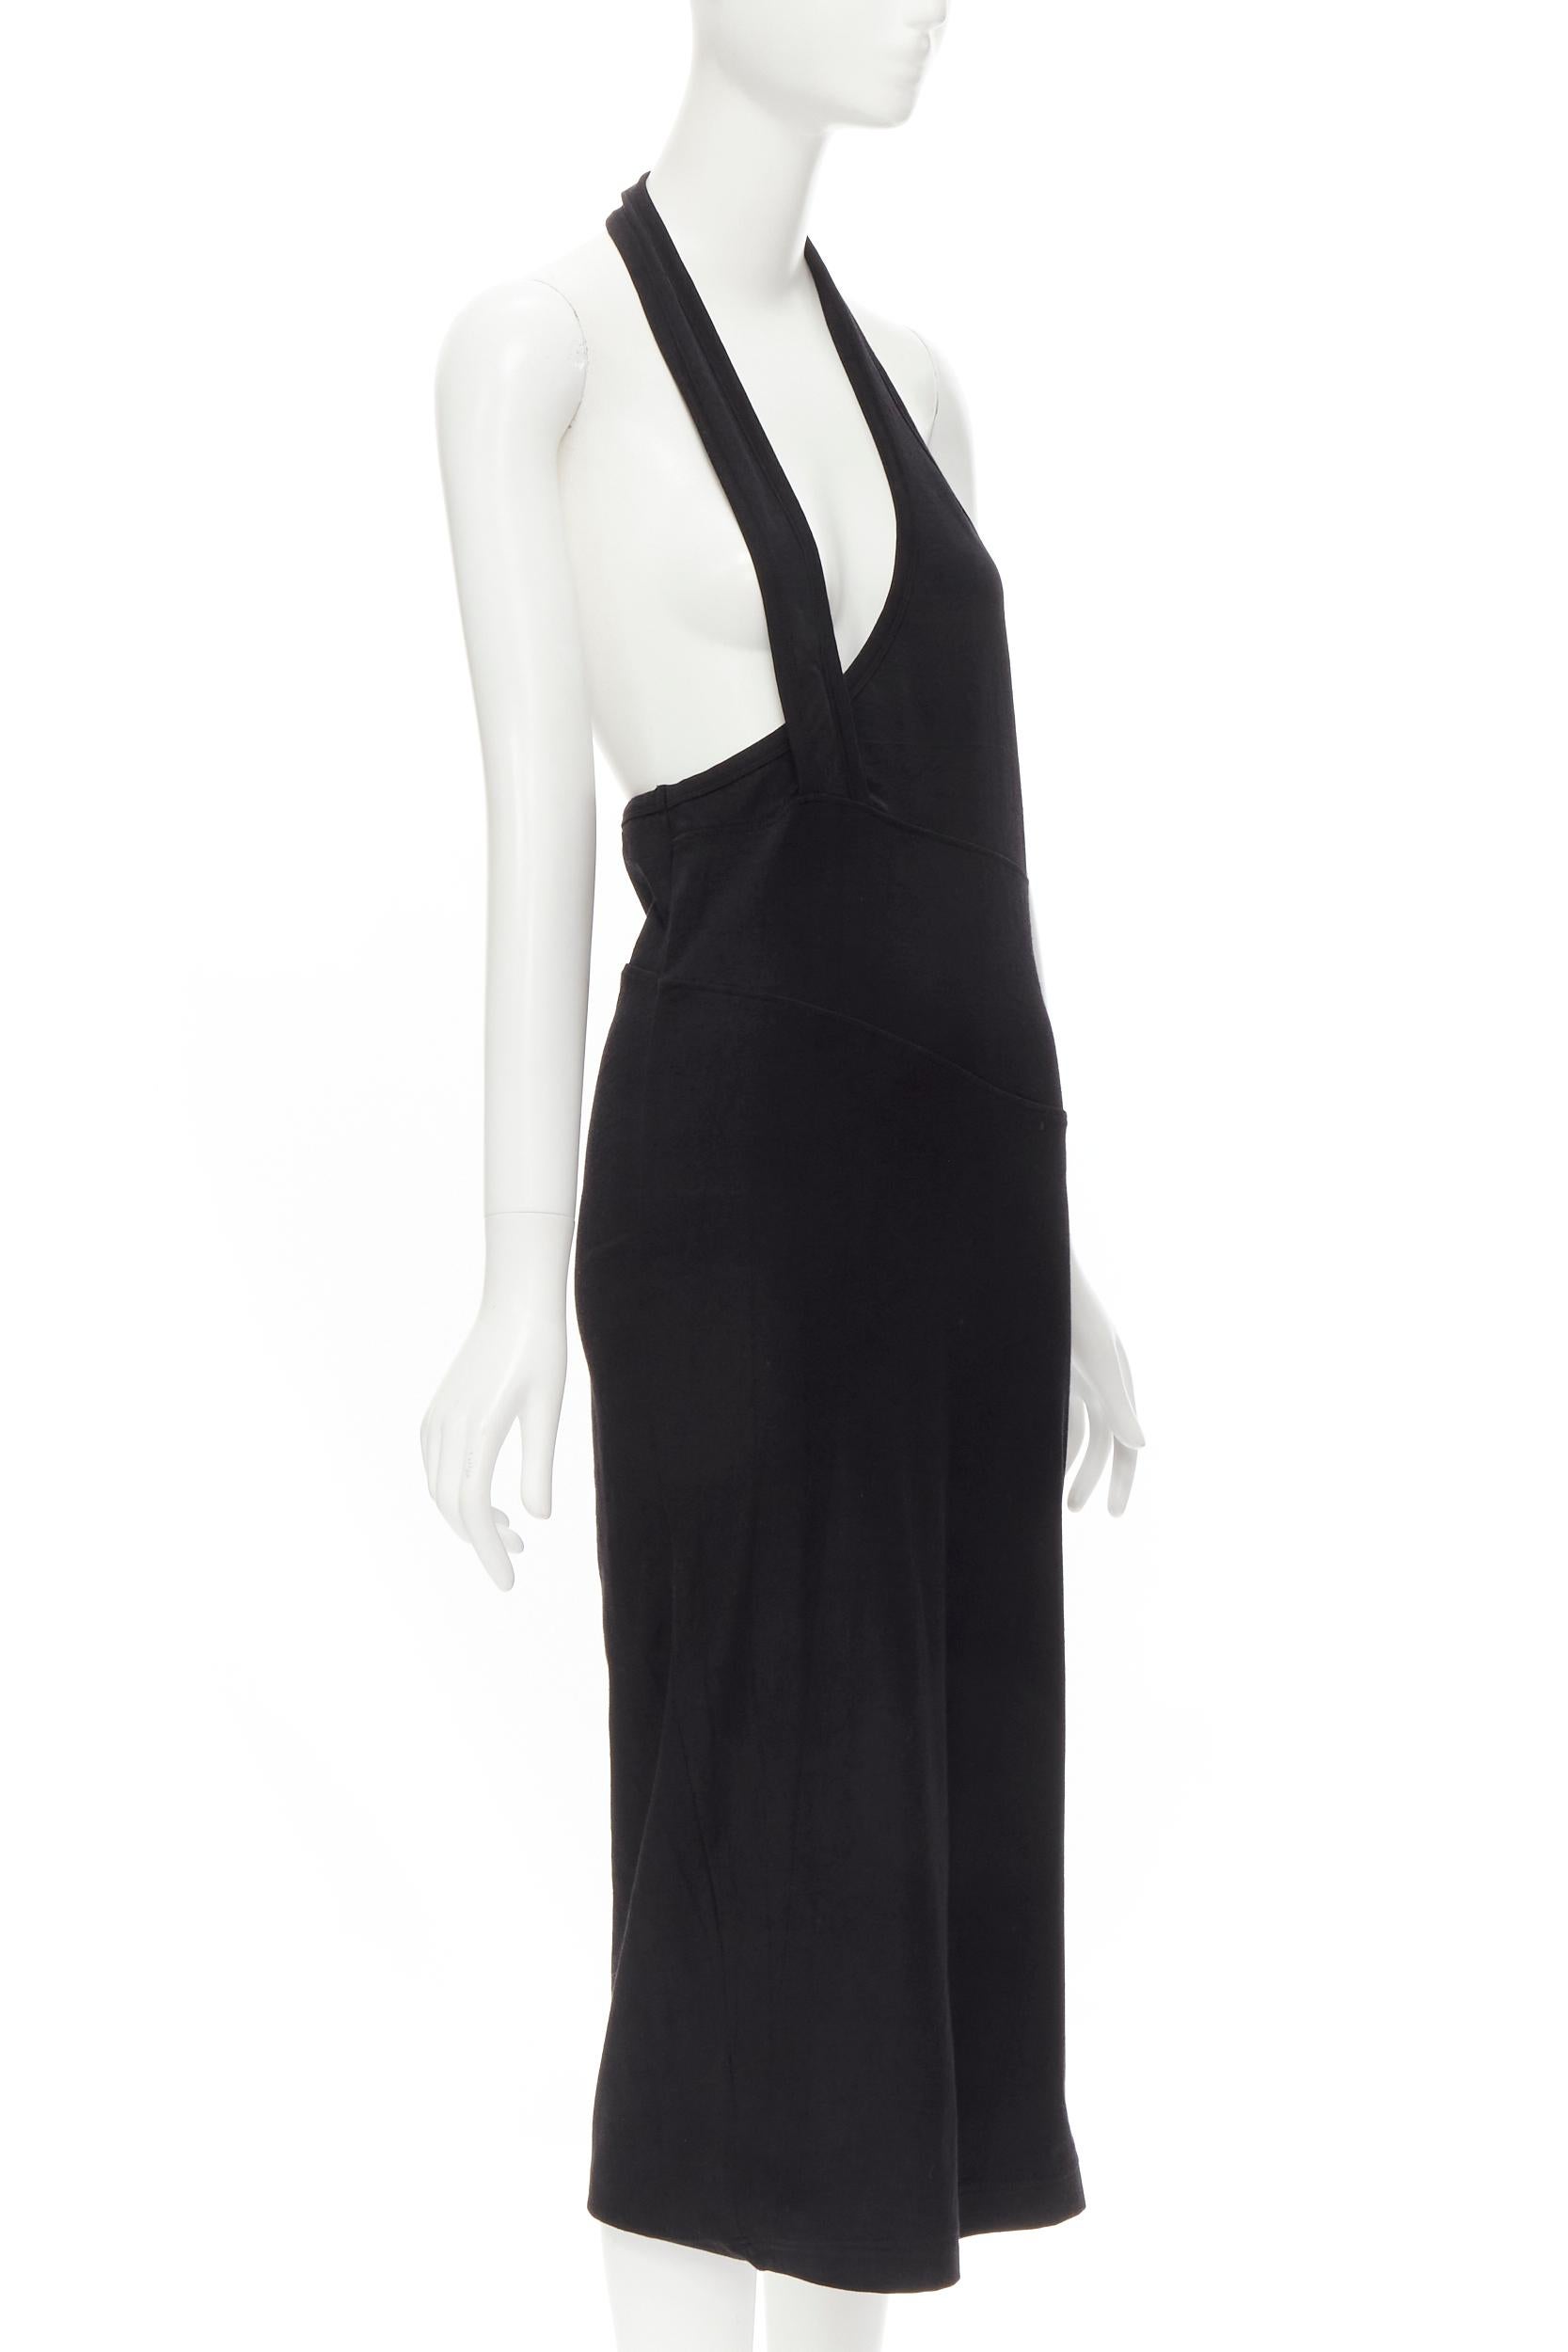 Black COMME DES GARCONS 1980s Vintage black nylon cotton halter bias skirt dress For Sale